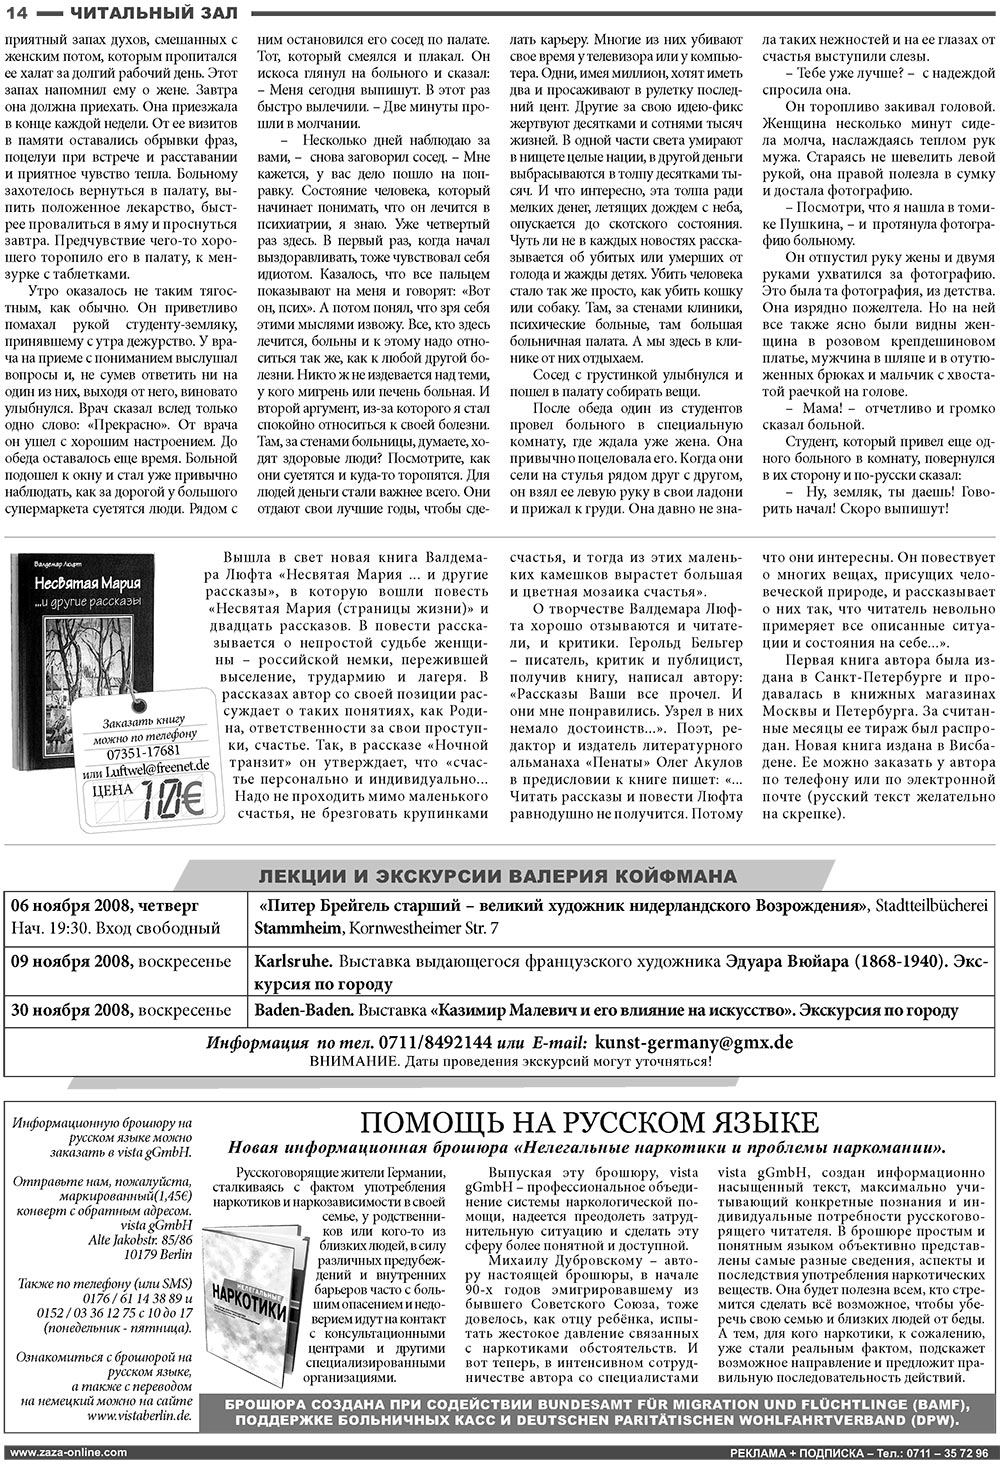 Известия BW (газета). 2008 год, номер 10, стр. 14